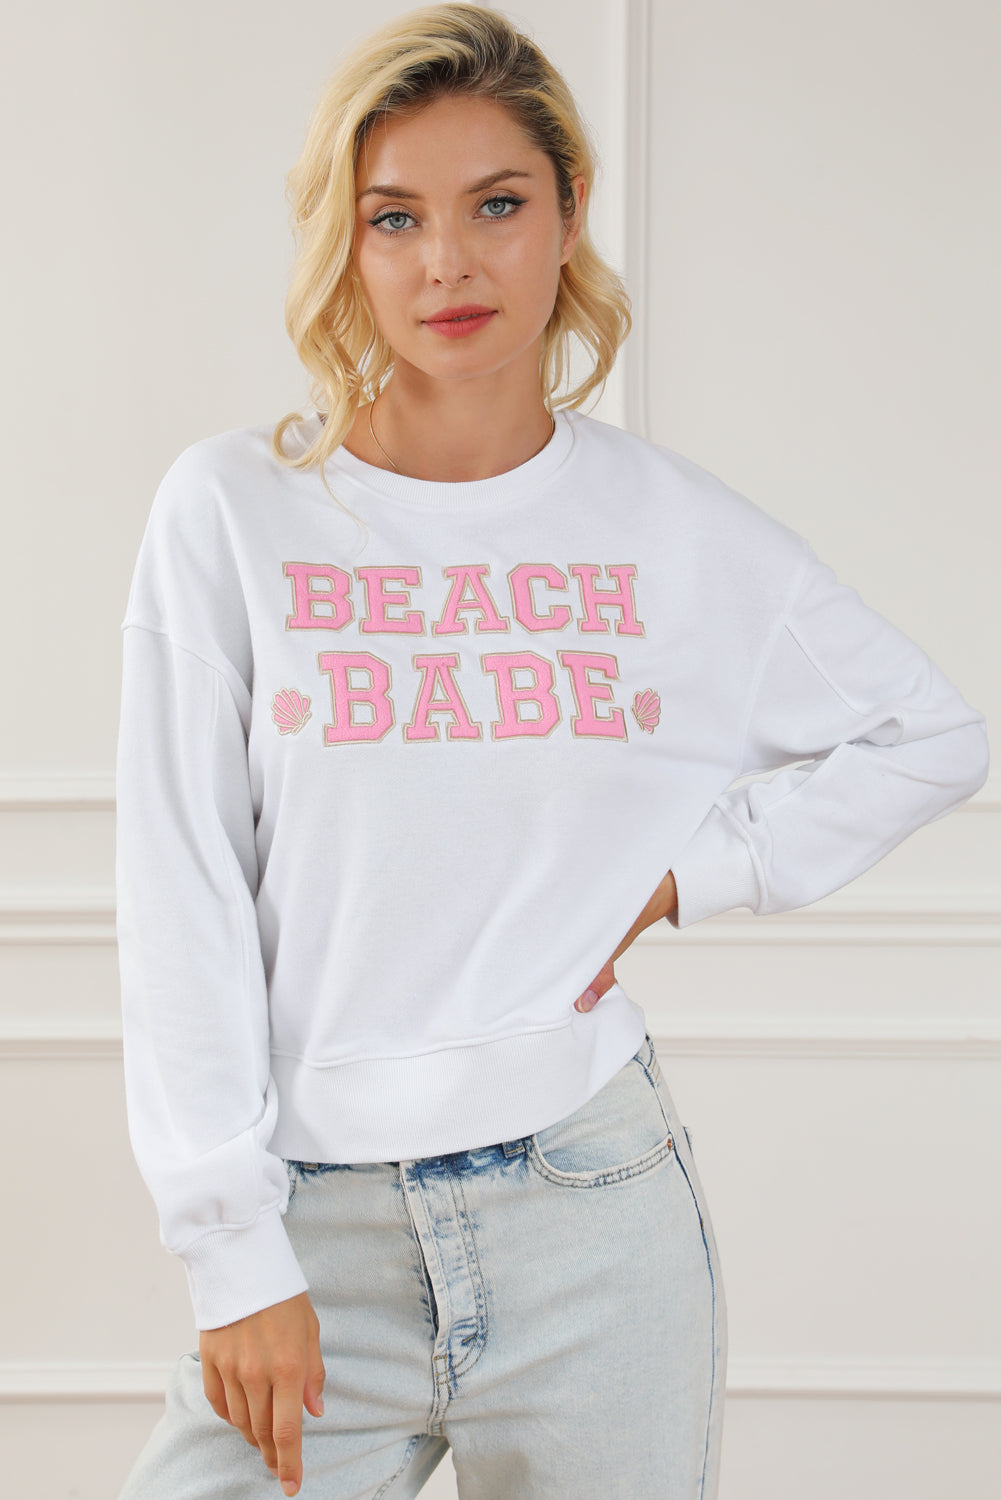 Felpa casual grafica bianca BEACH BABE con slogan